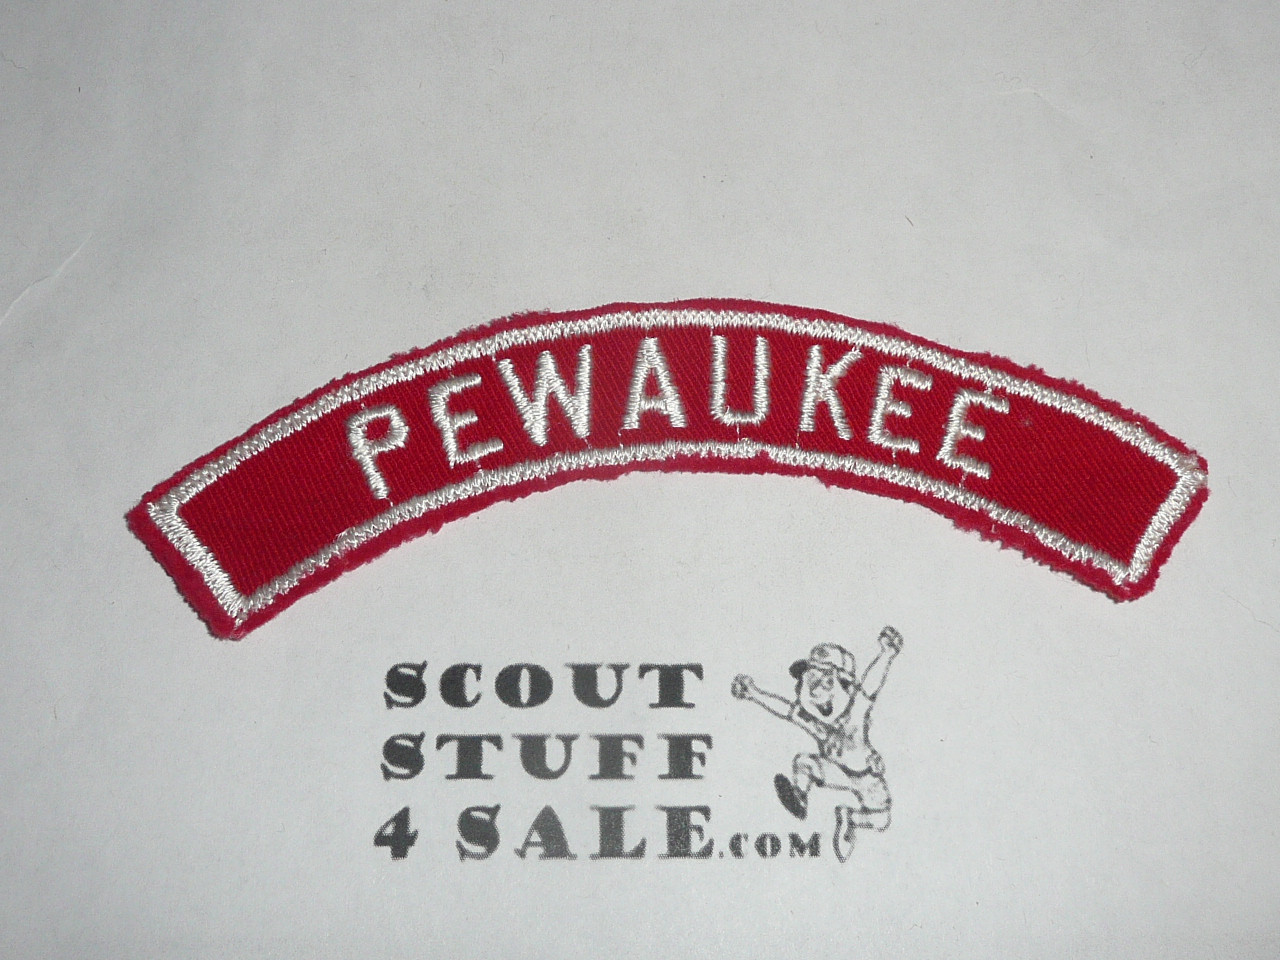 PEWAUKEE Red and White Community Strip, sewn